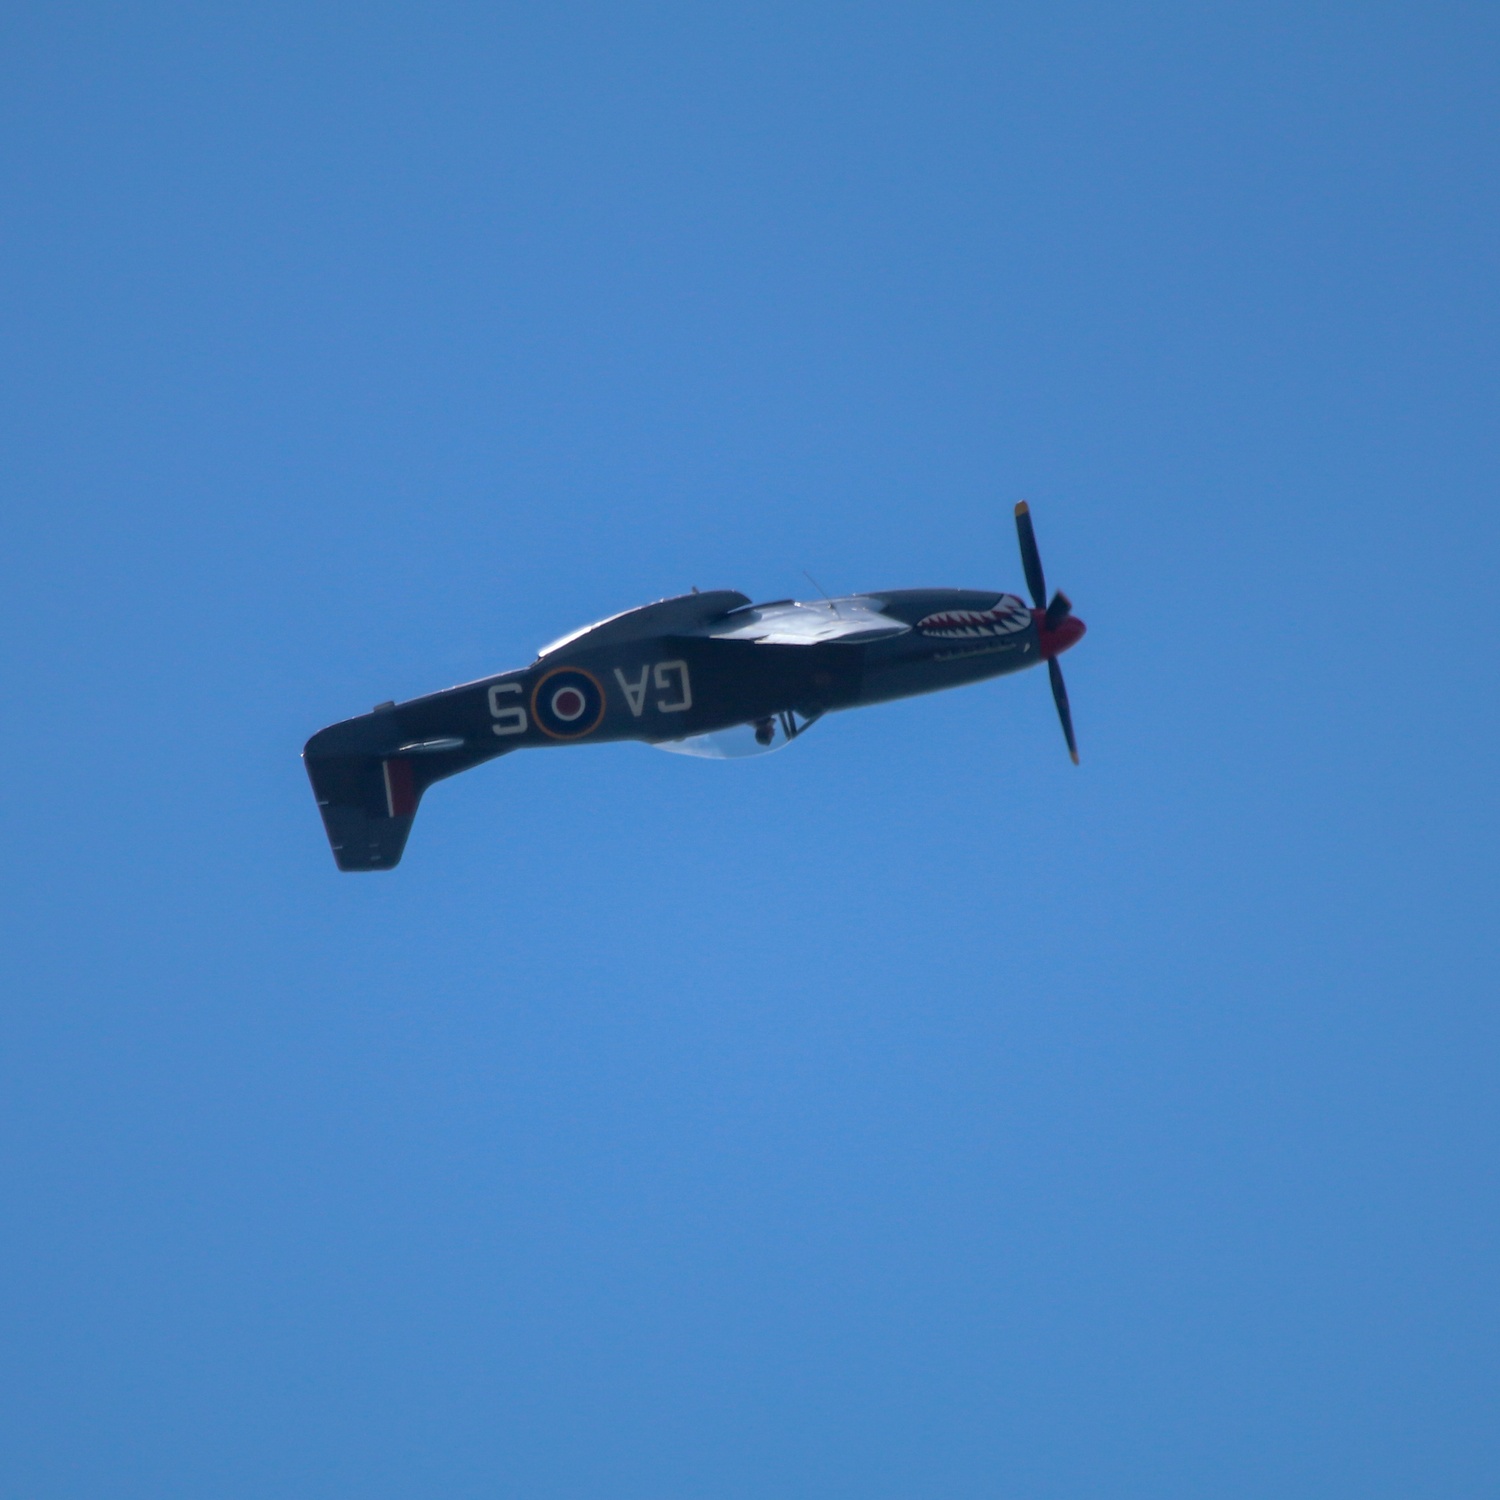 North American P-51 Mustang flying upside down as part of loop against clear blue sky